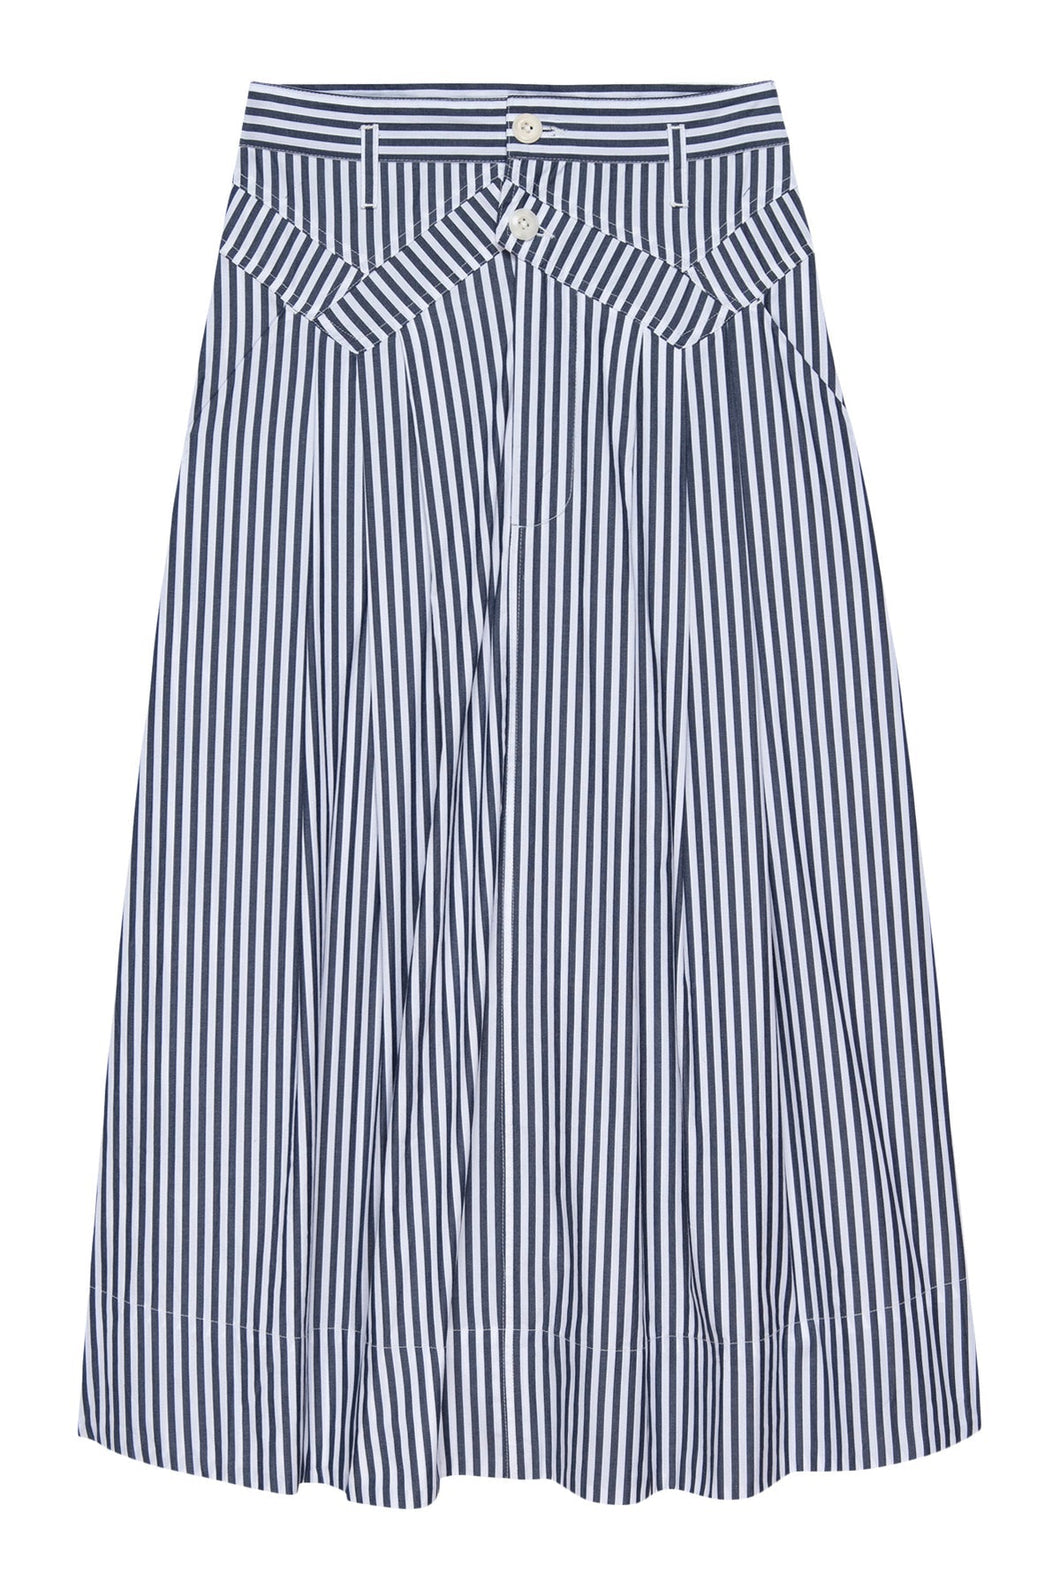 The Great Field Skirt - Navy Studio Stripe